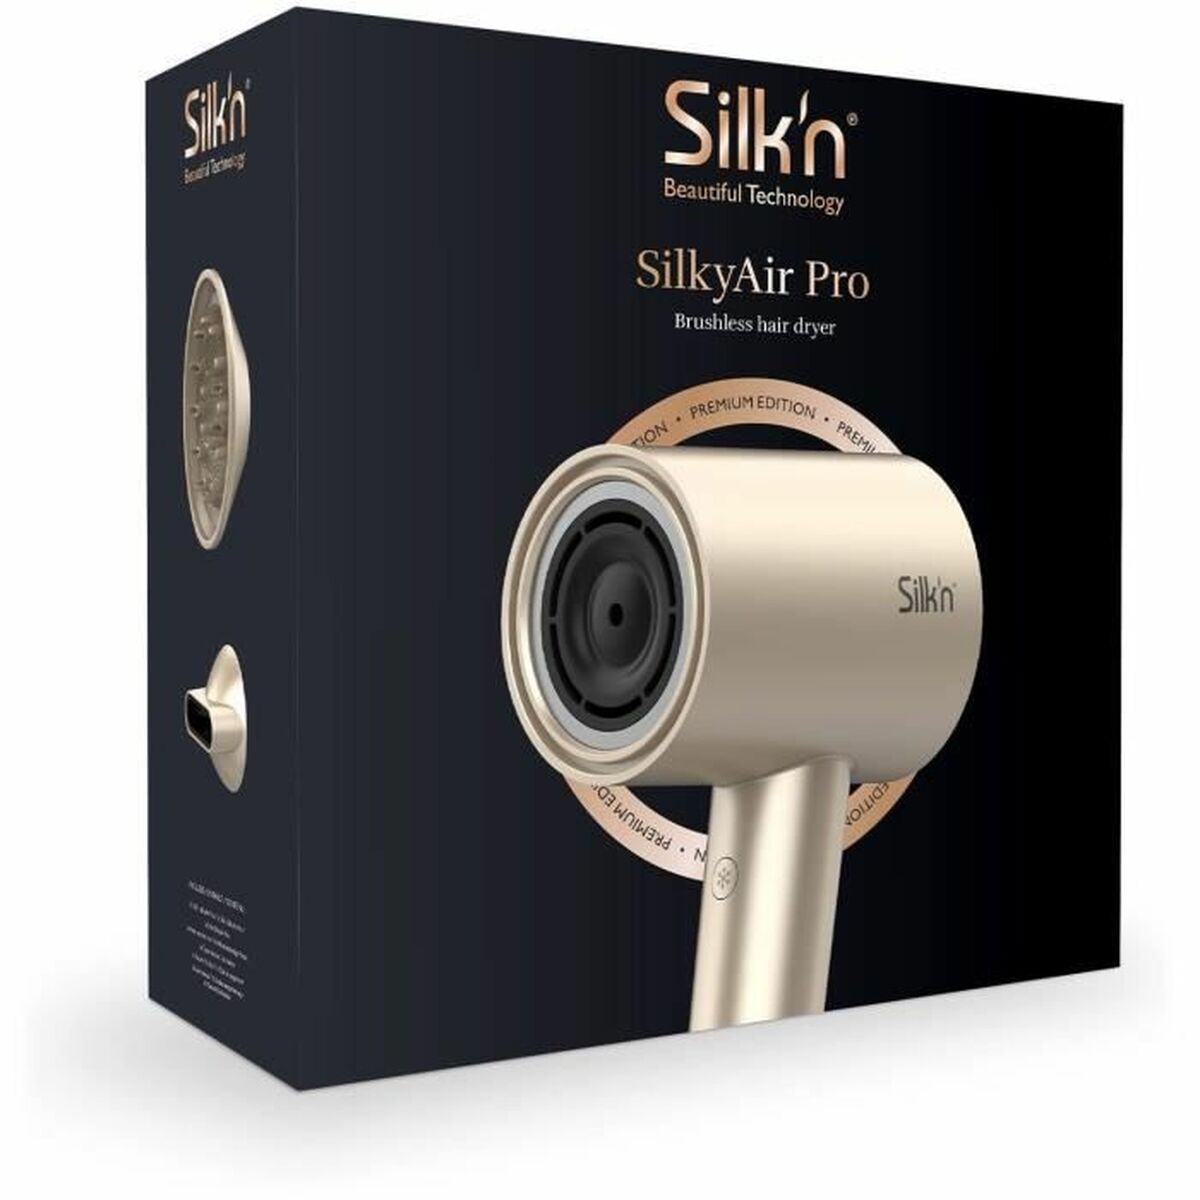 Kaufe Silk'n SilkyAir Pro Gold 1600 W Fön bei AWK Flagship um € 307.00